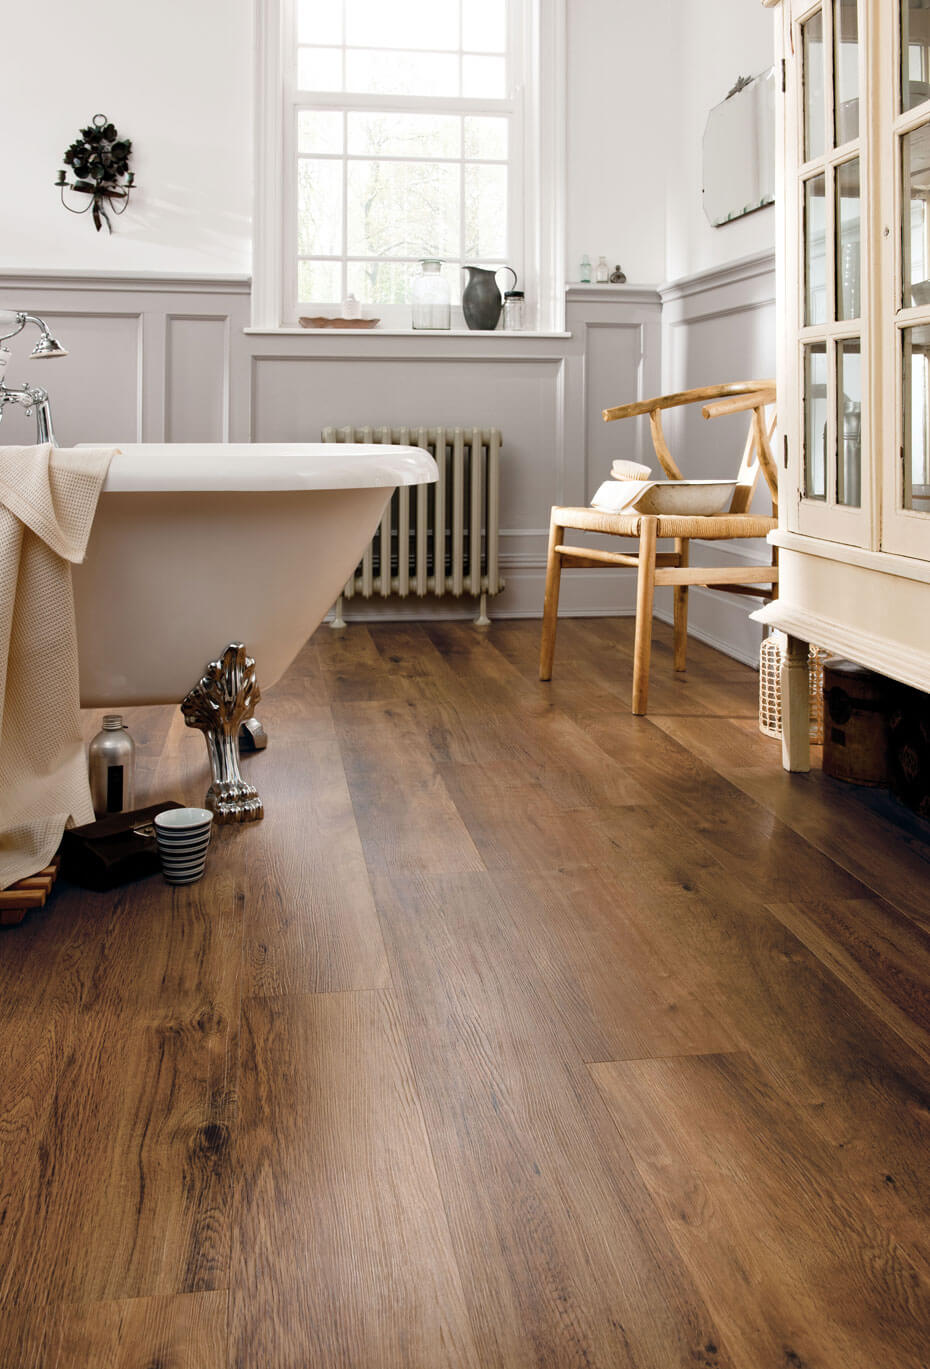 What Is Popular For Bathroom Flooring Best Home Design Ideas 8163